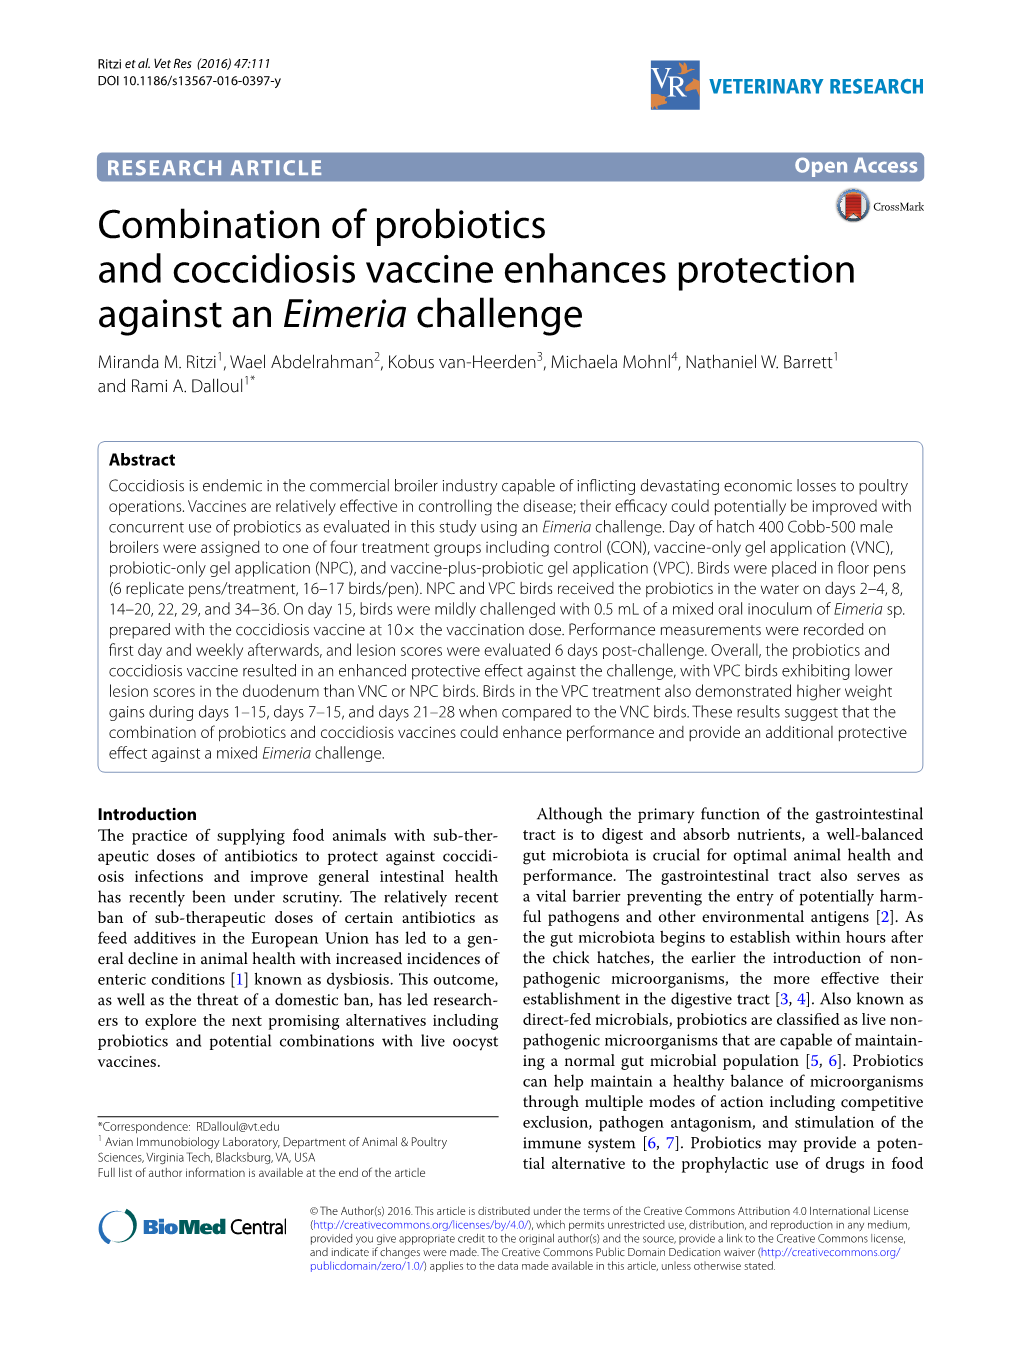 Combination of Probiotics and Coccidiosis Vaccine Enhances Protection Against an Eimeria Challenge Miranda M